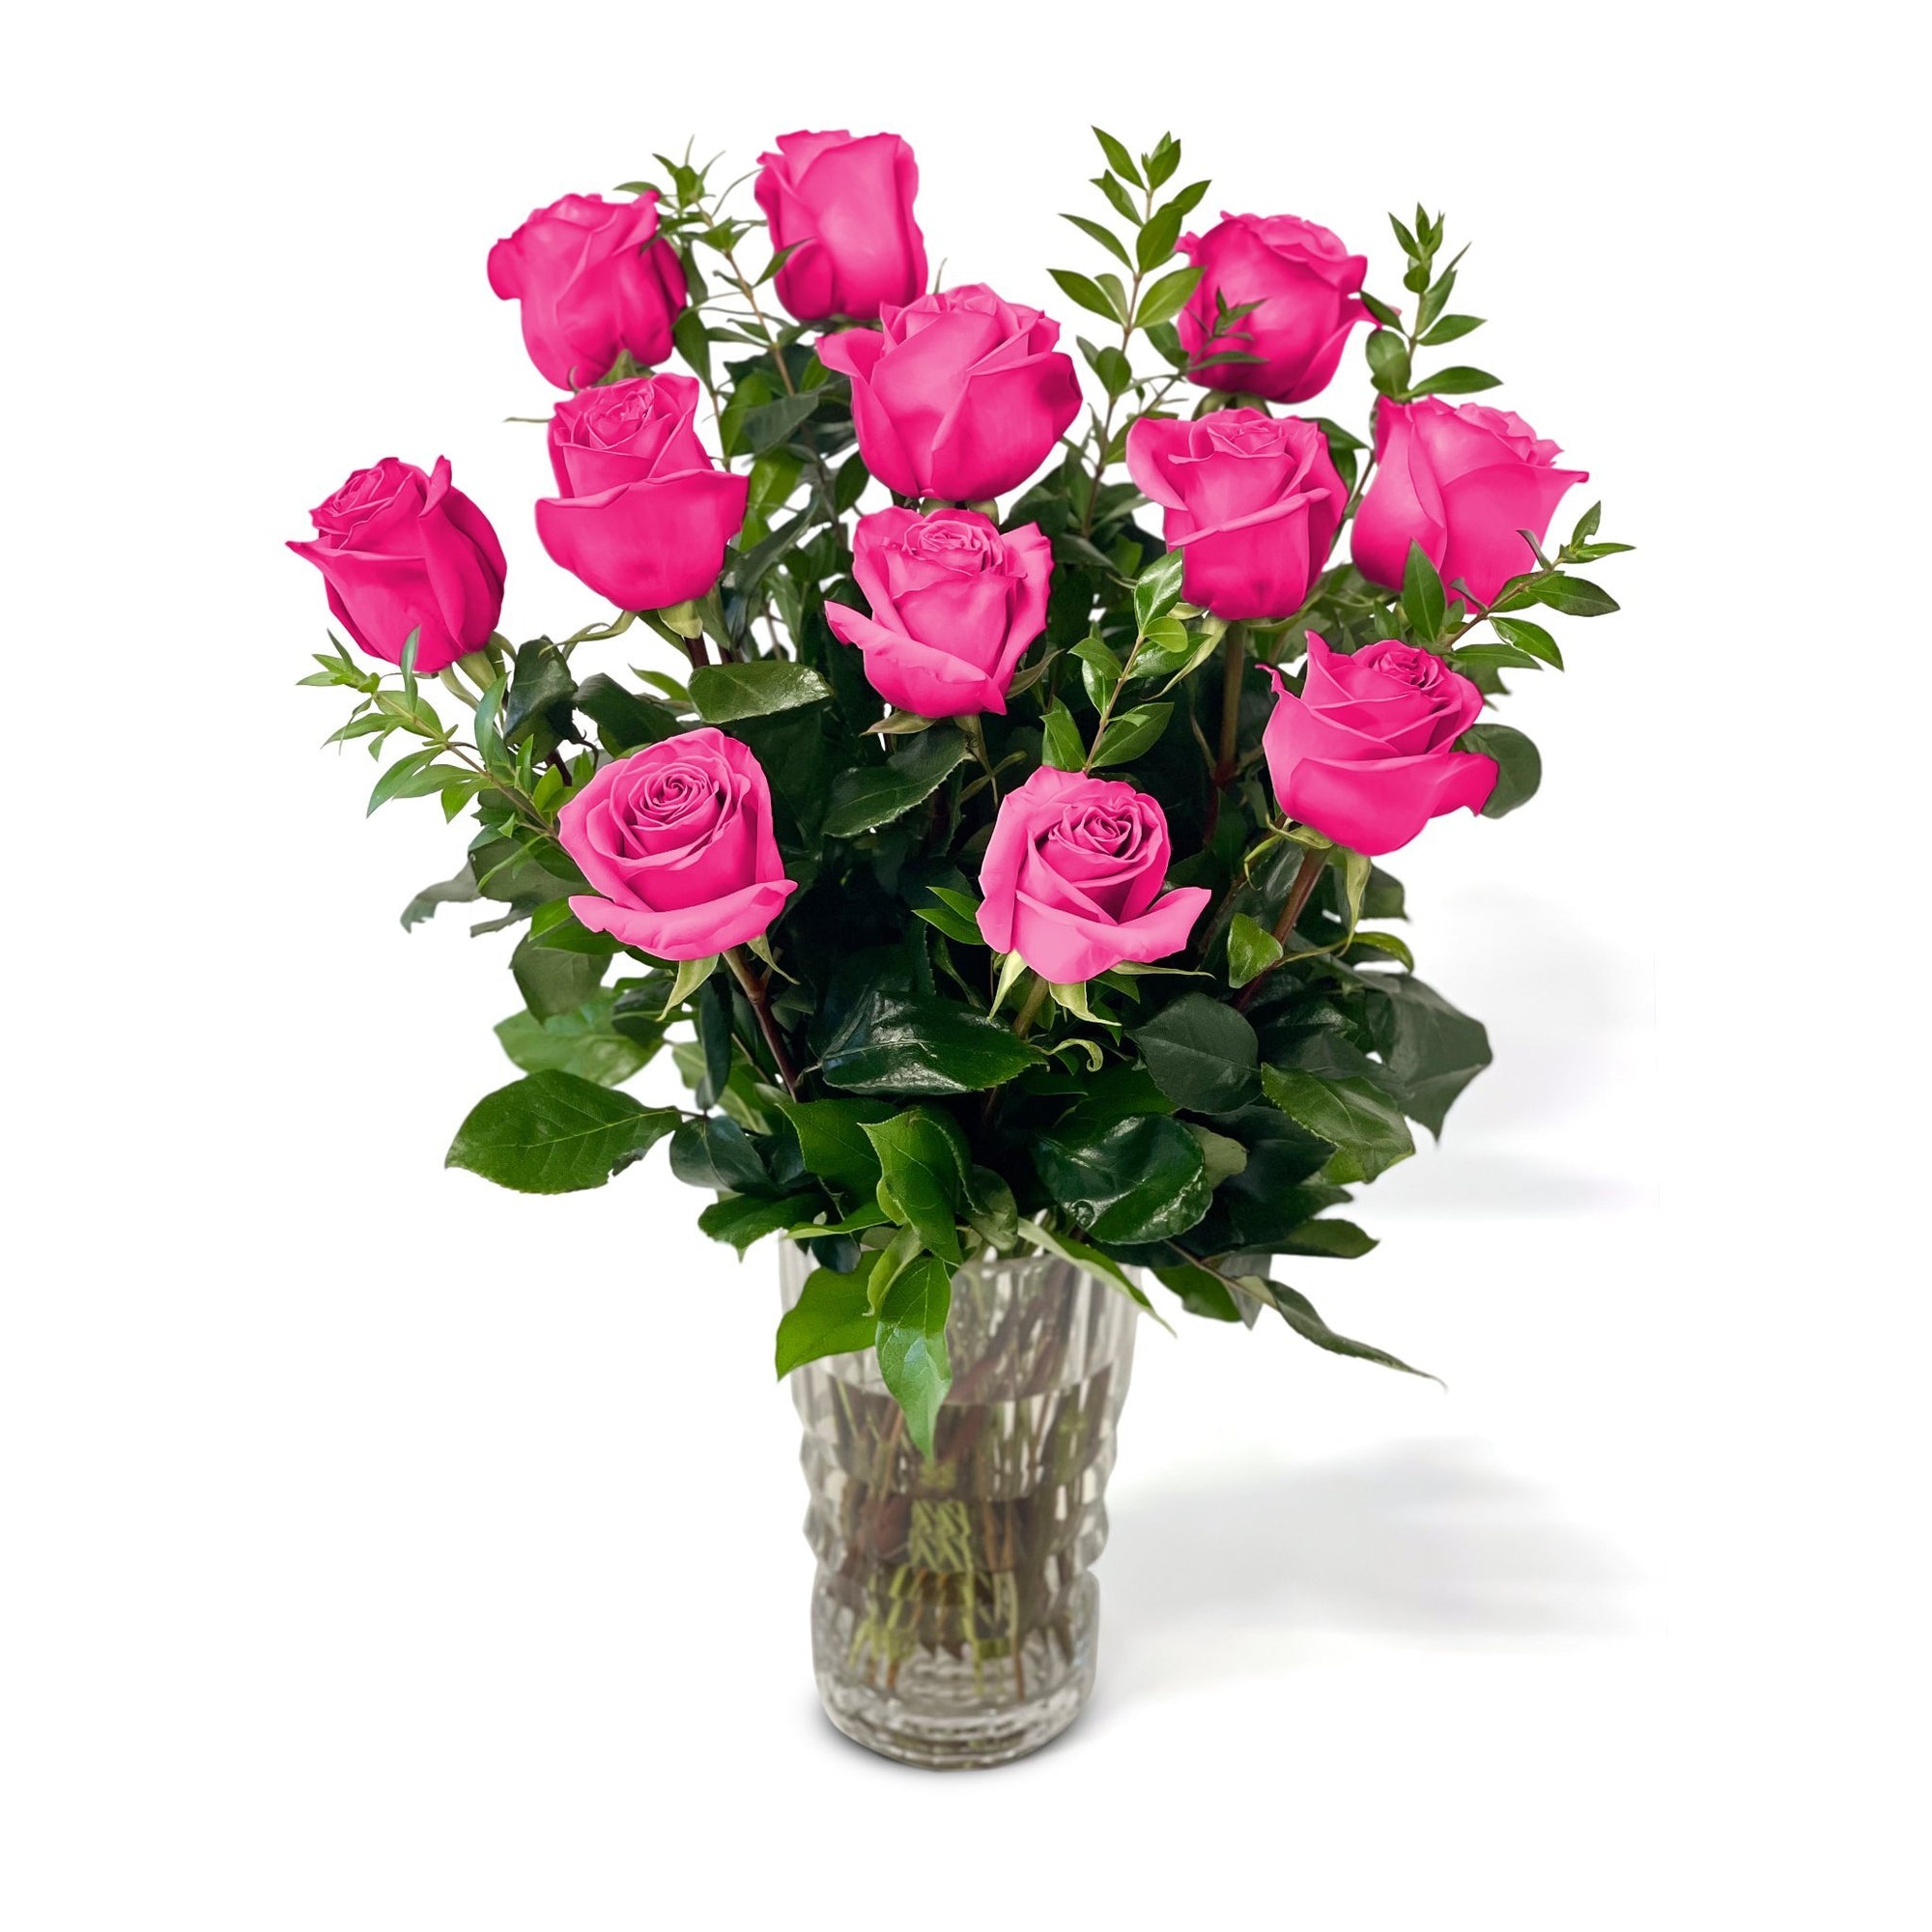 Manhattan Flower Delivery - Fresh Roses in a Crystal Vase | Dozen Hot Pink - Roses